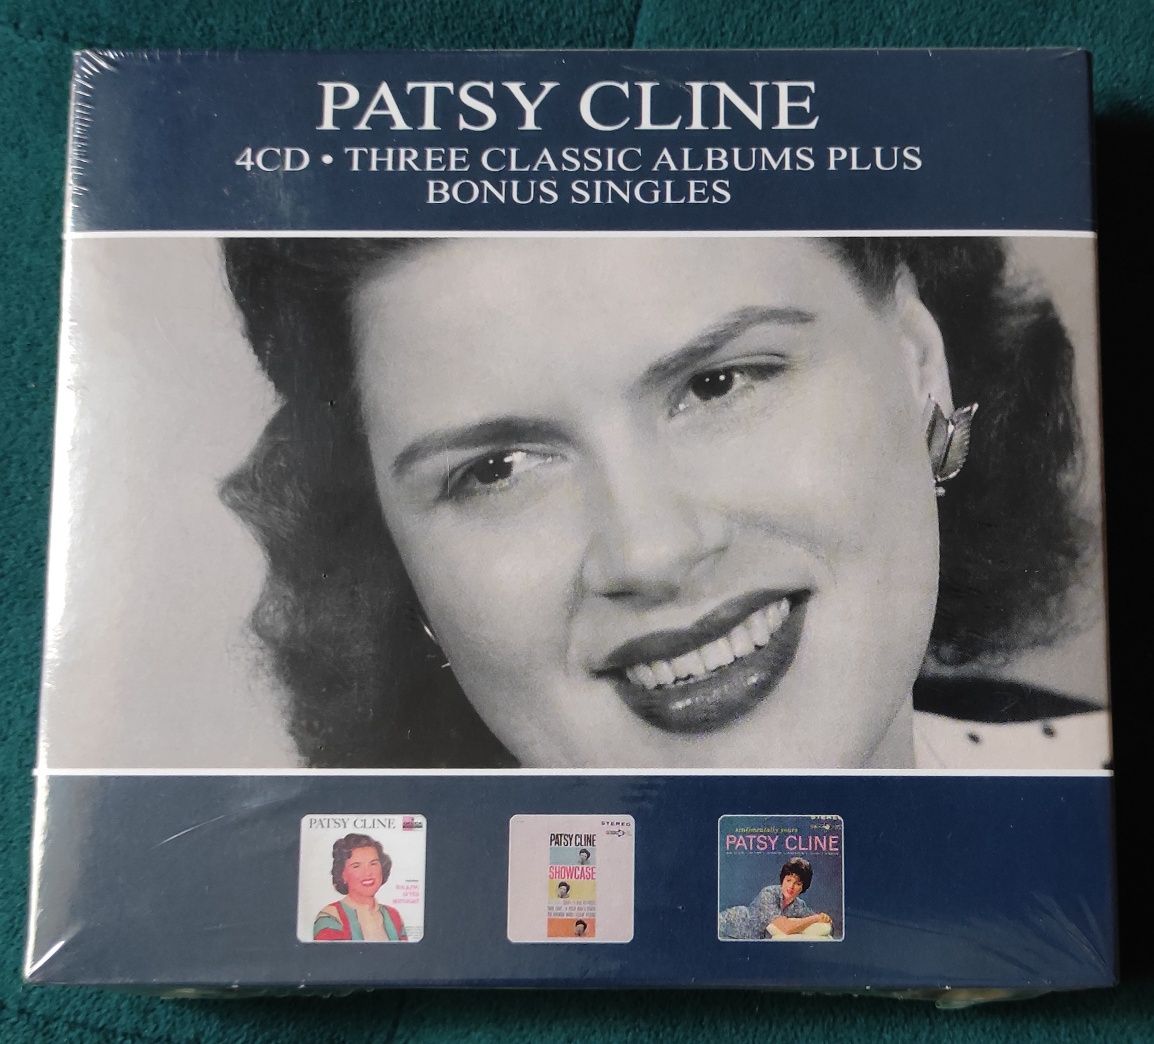 Patsy Cline - Three Classic Albums Plus Bonus Singles - 4CD Novo